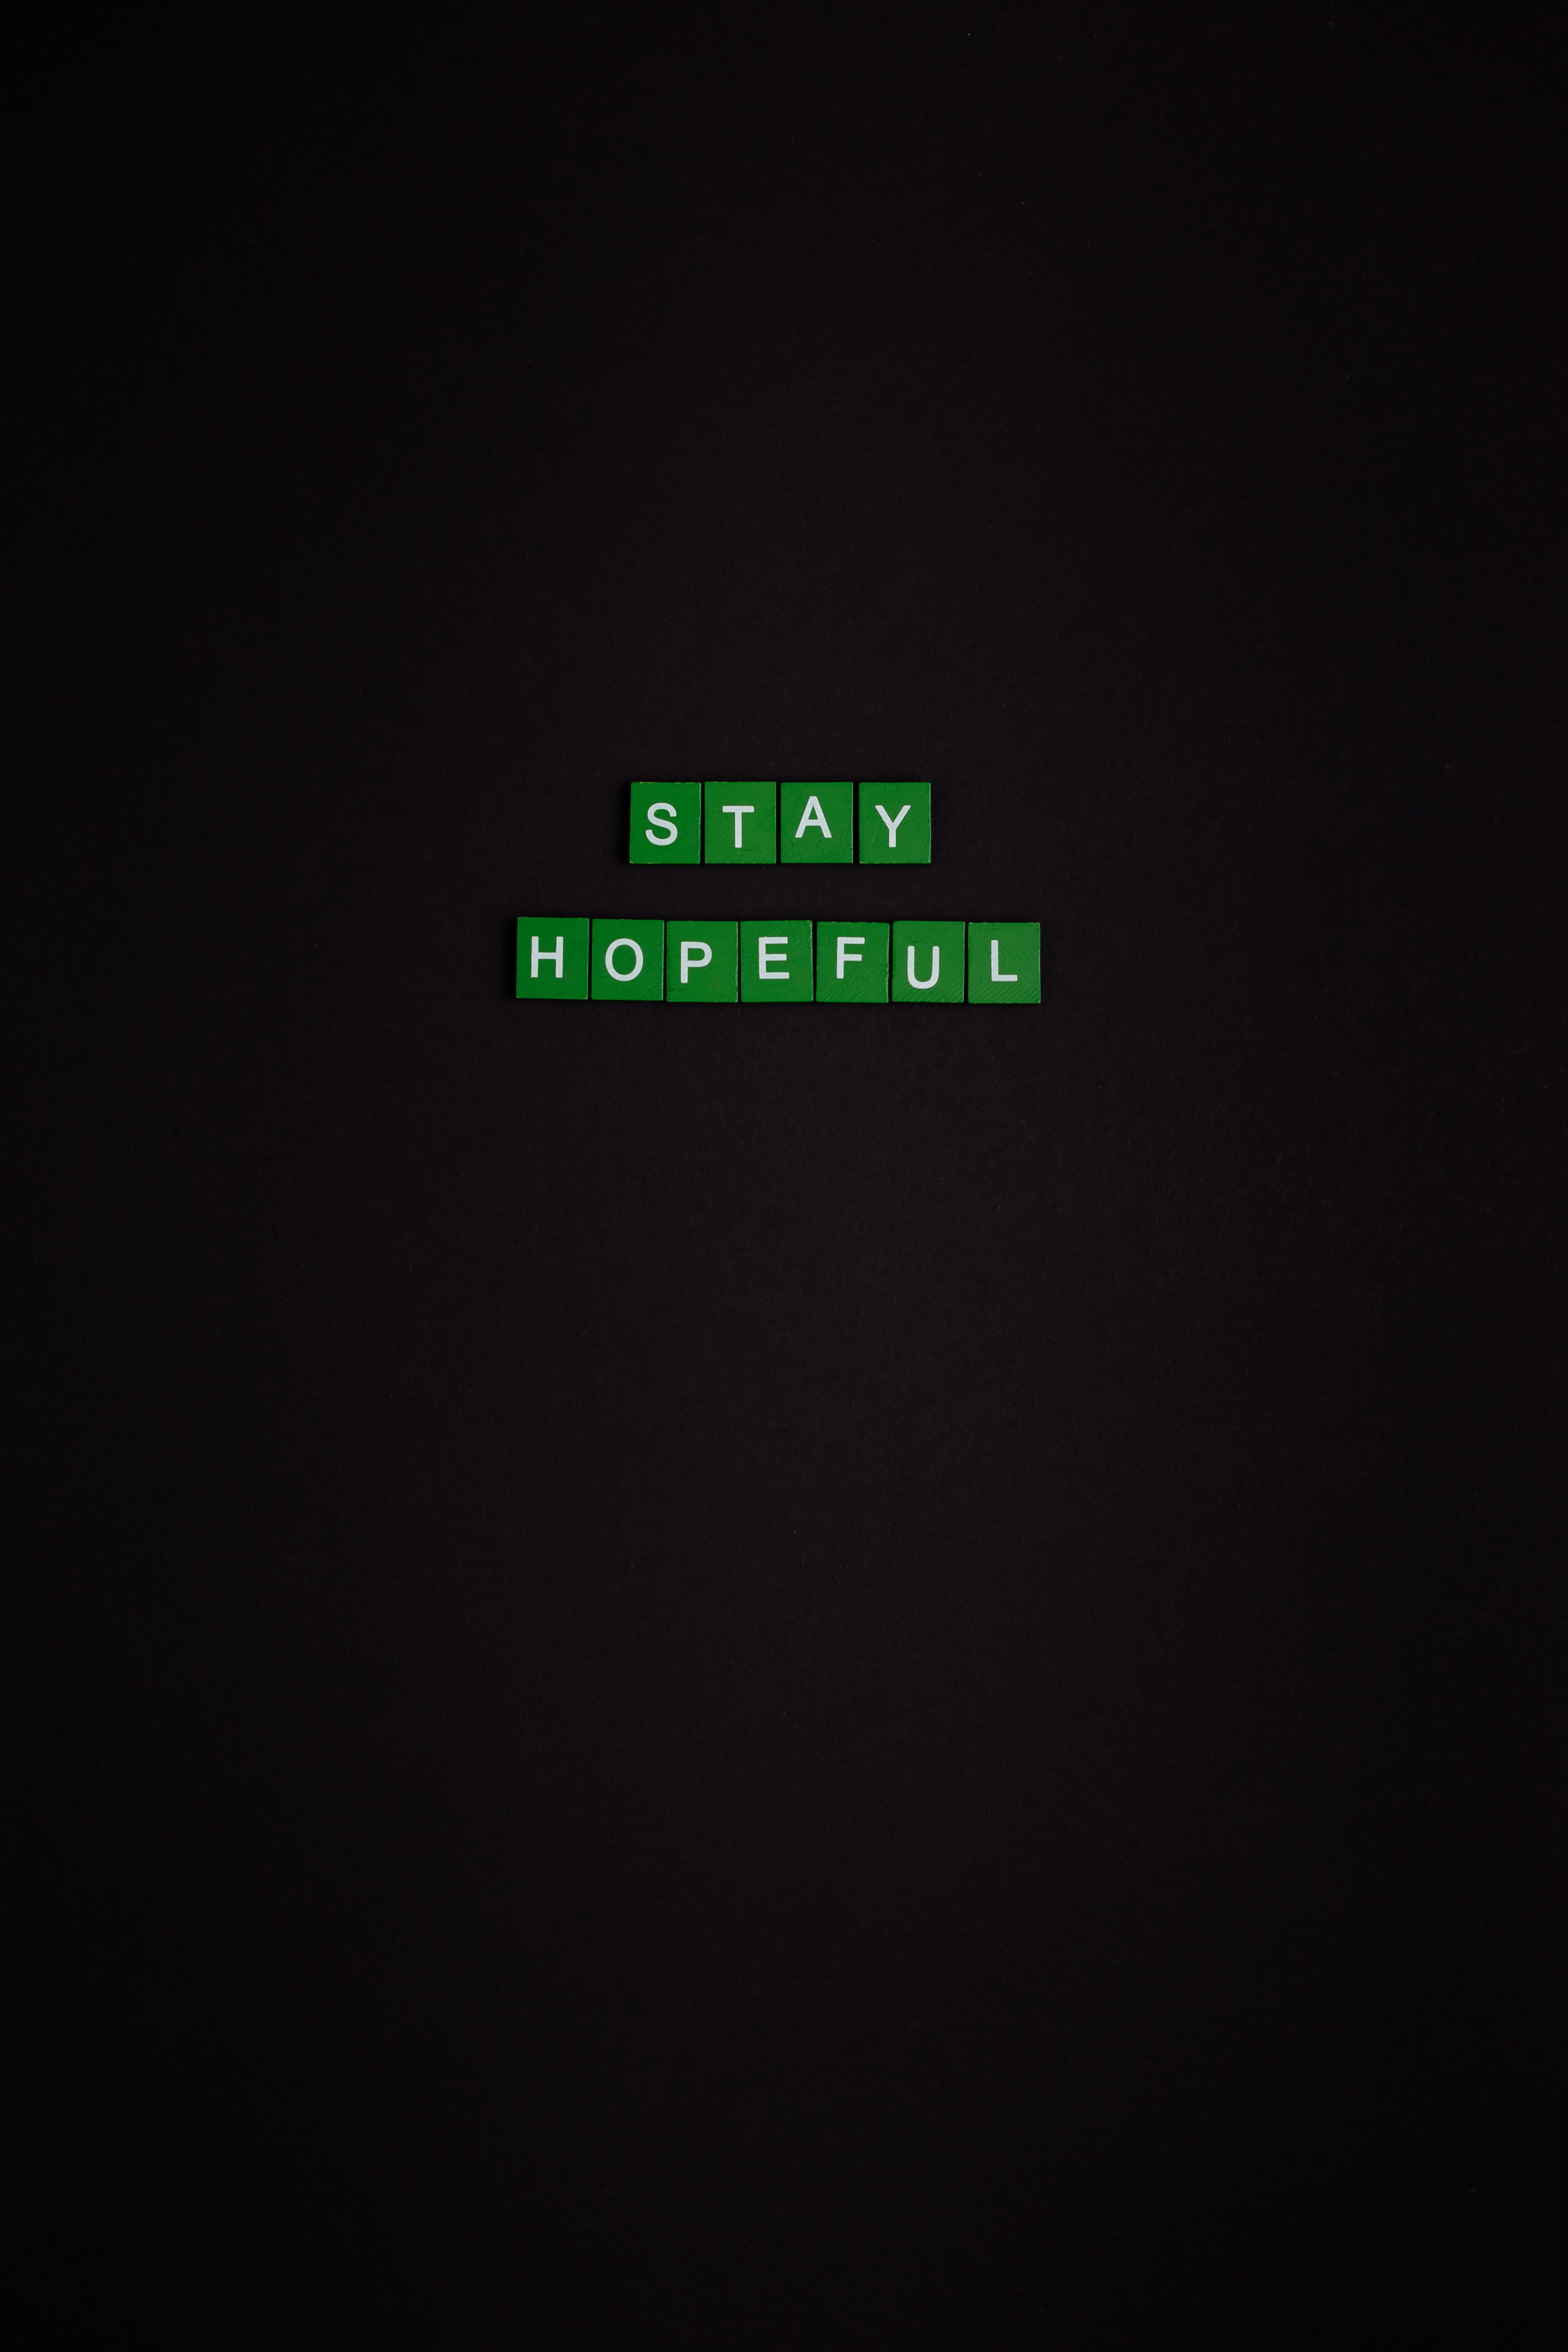 Stay hopeful text on black background